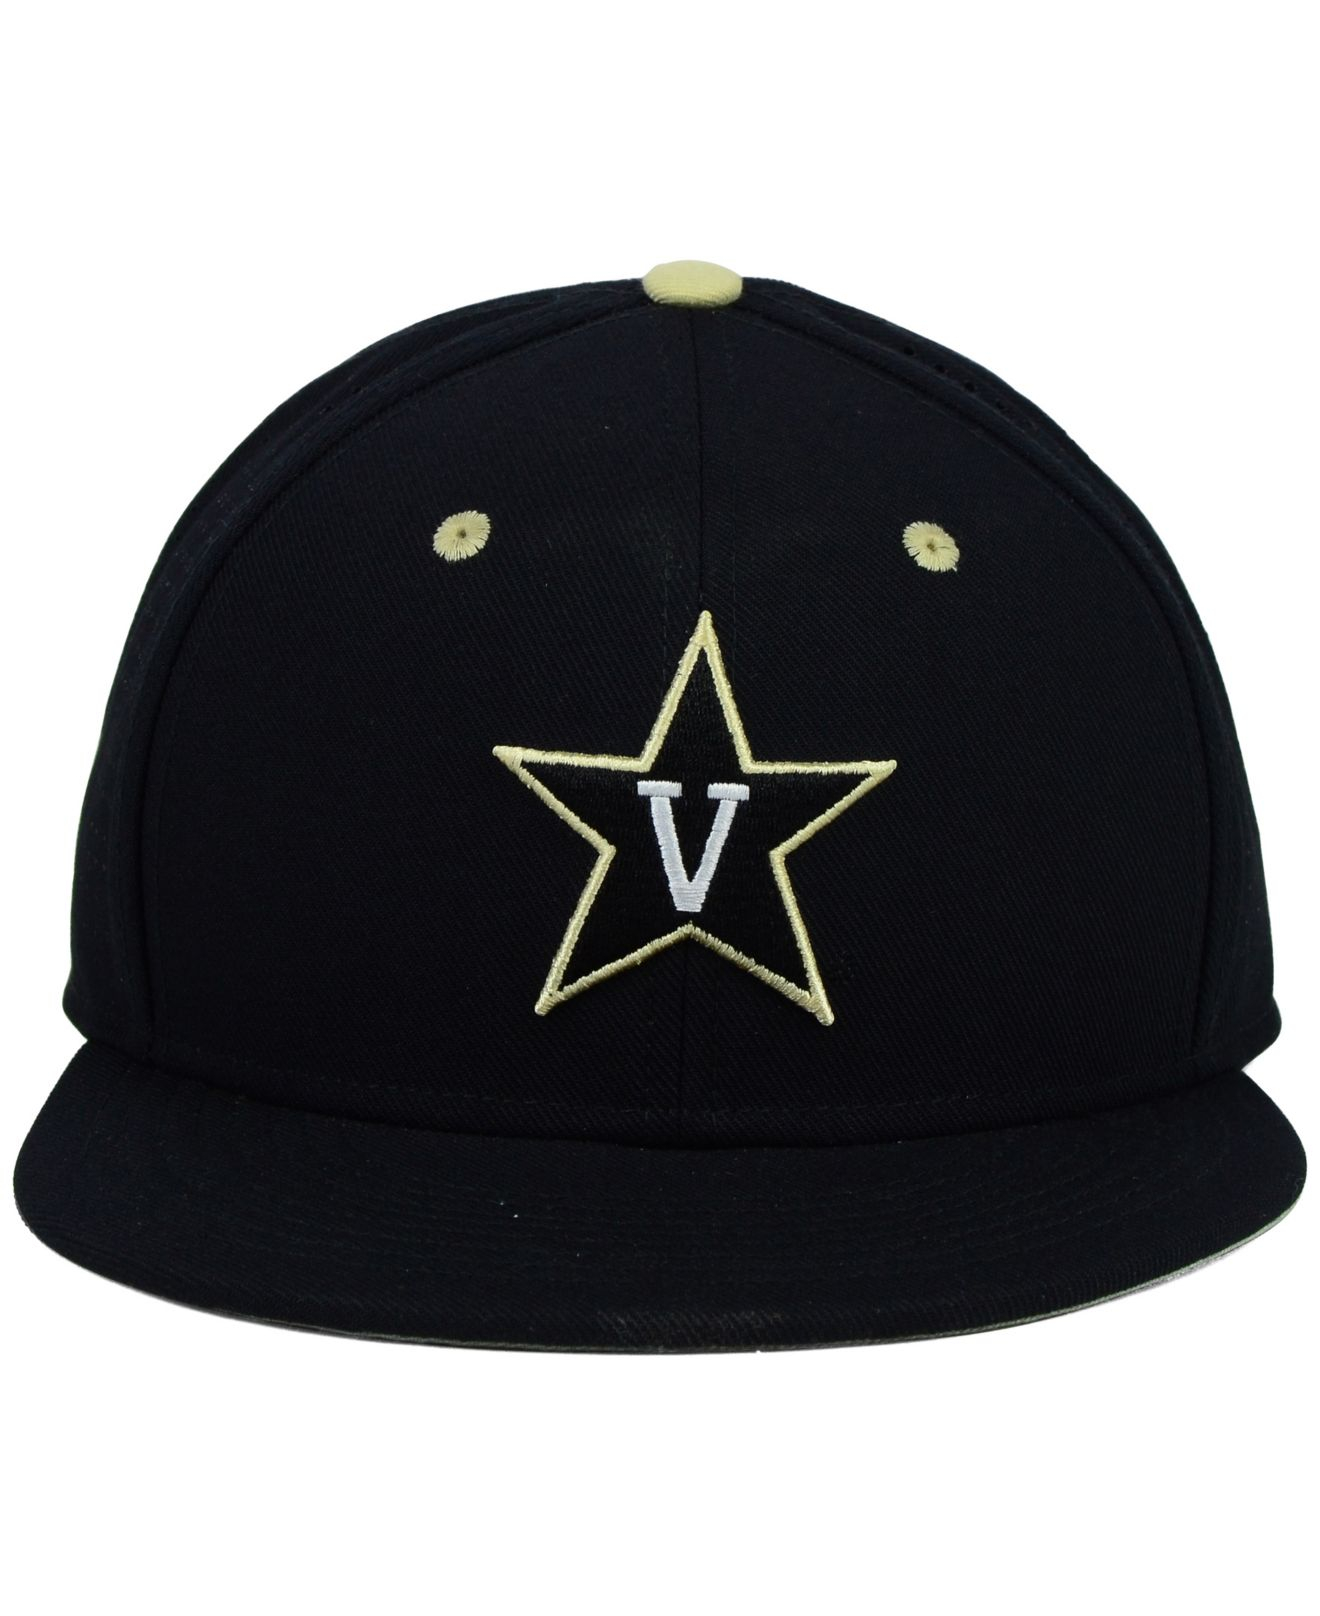 vanderbilt fitted baseball hat closeout 